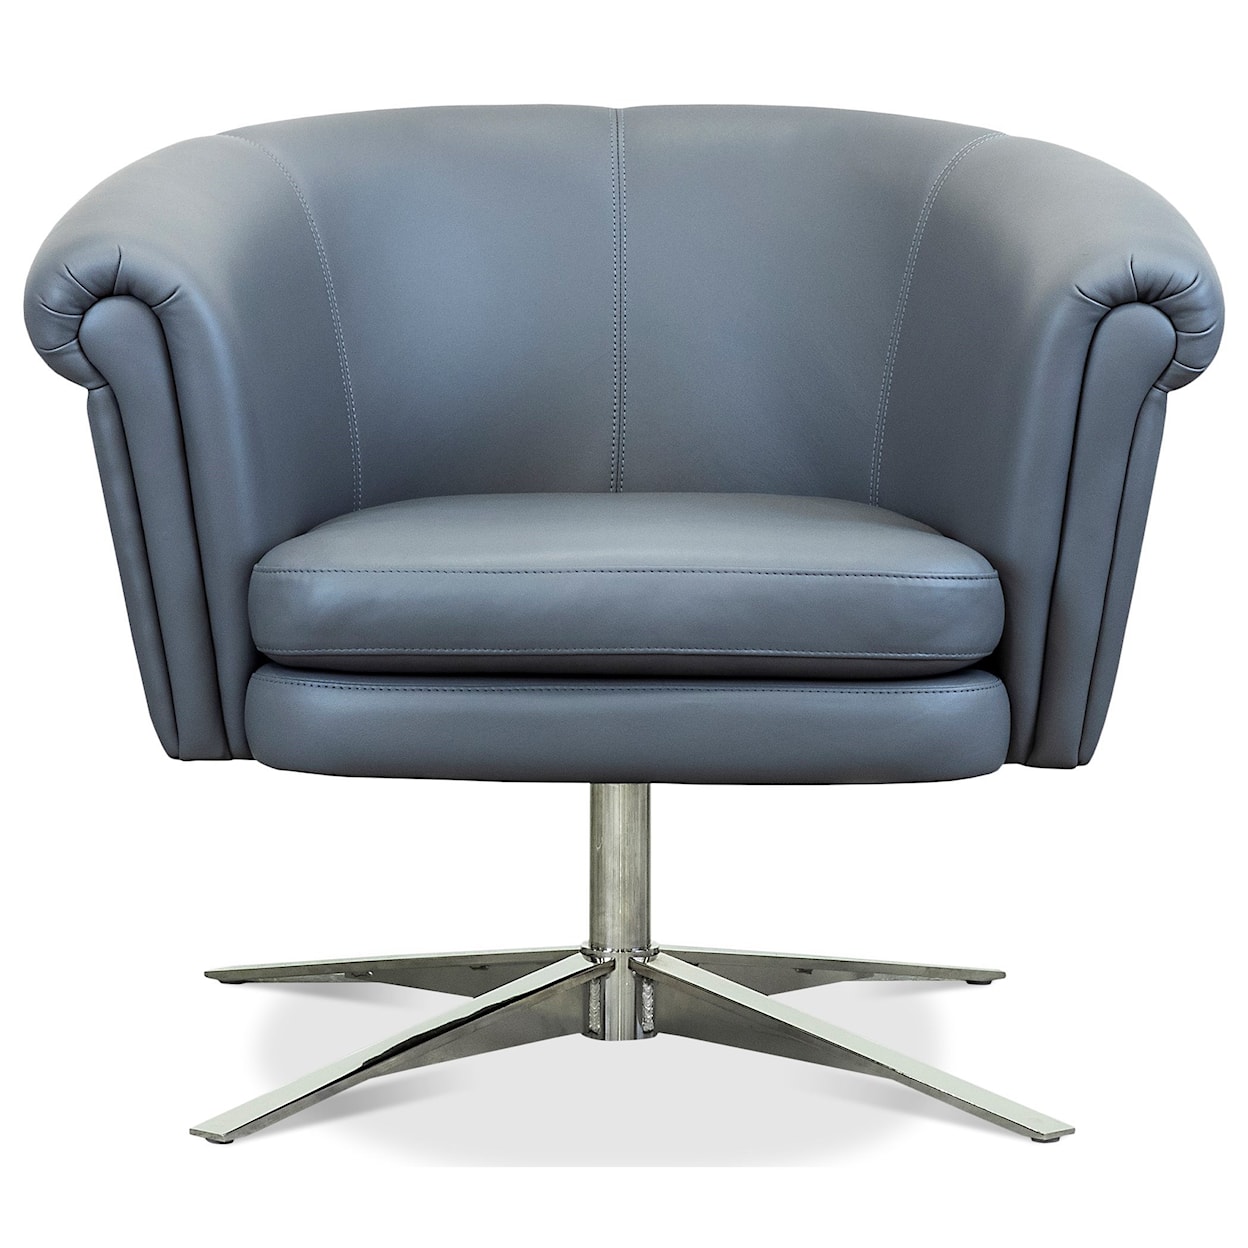 American Leather Orba Swivel Chair